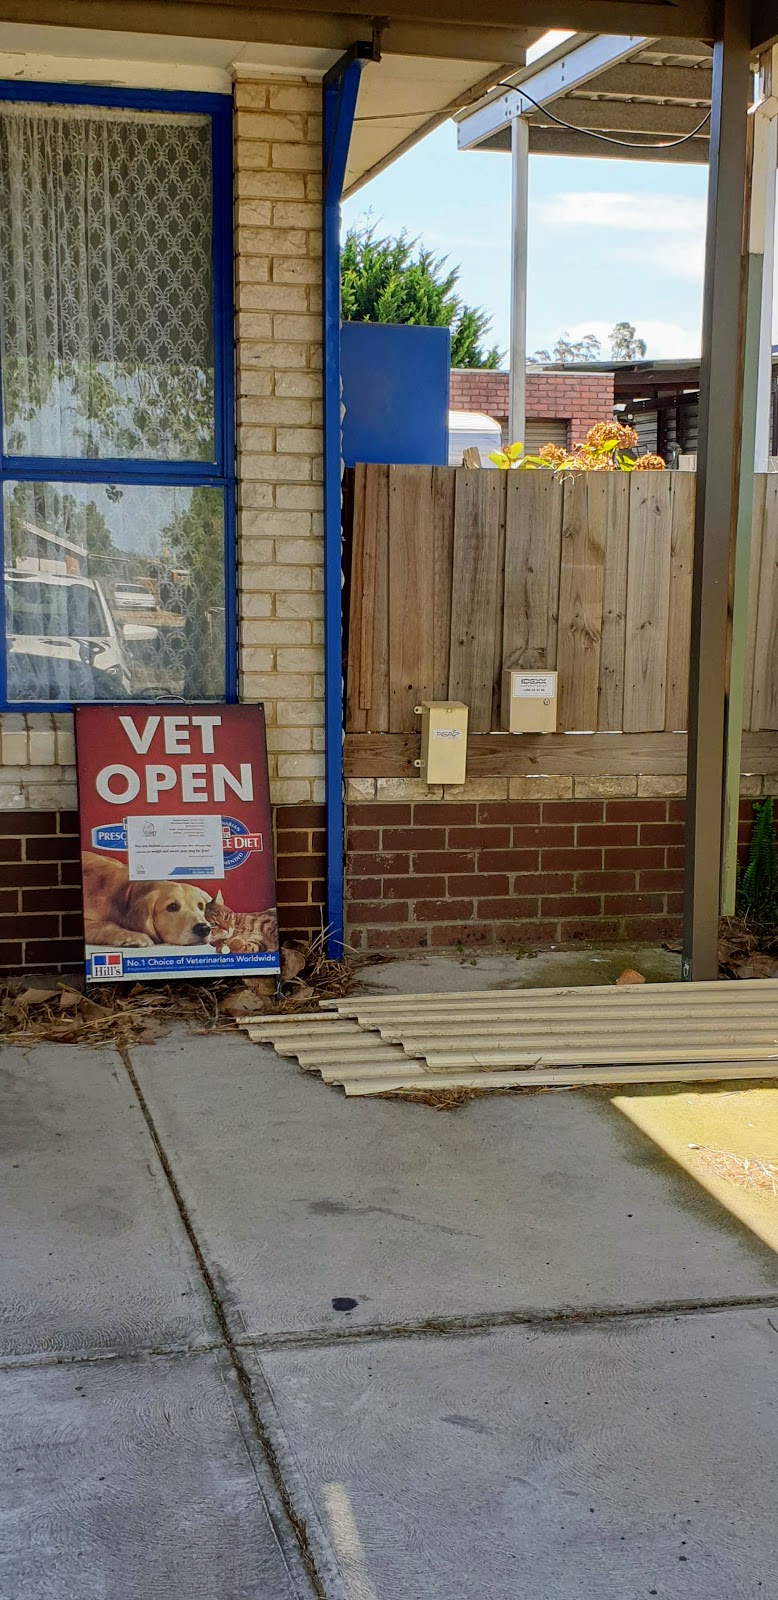 The Vet Centre | veterinary care | 10 Princes Hwy, Pakenham VIC 3810, Australia | 0359414140 OR +61 3 5941 4140